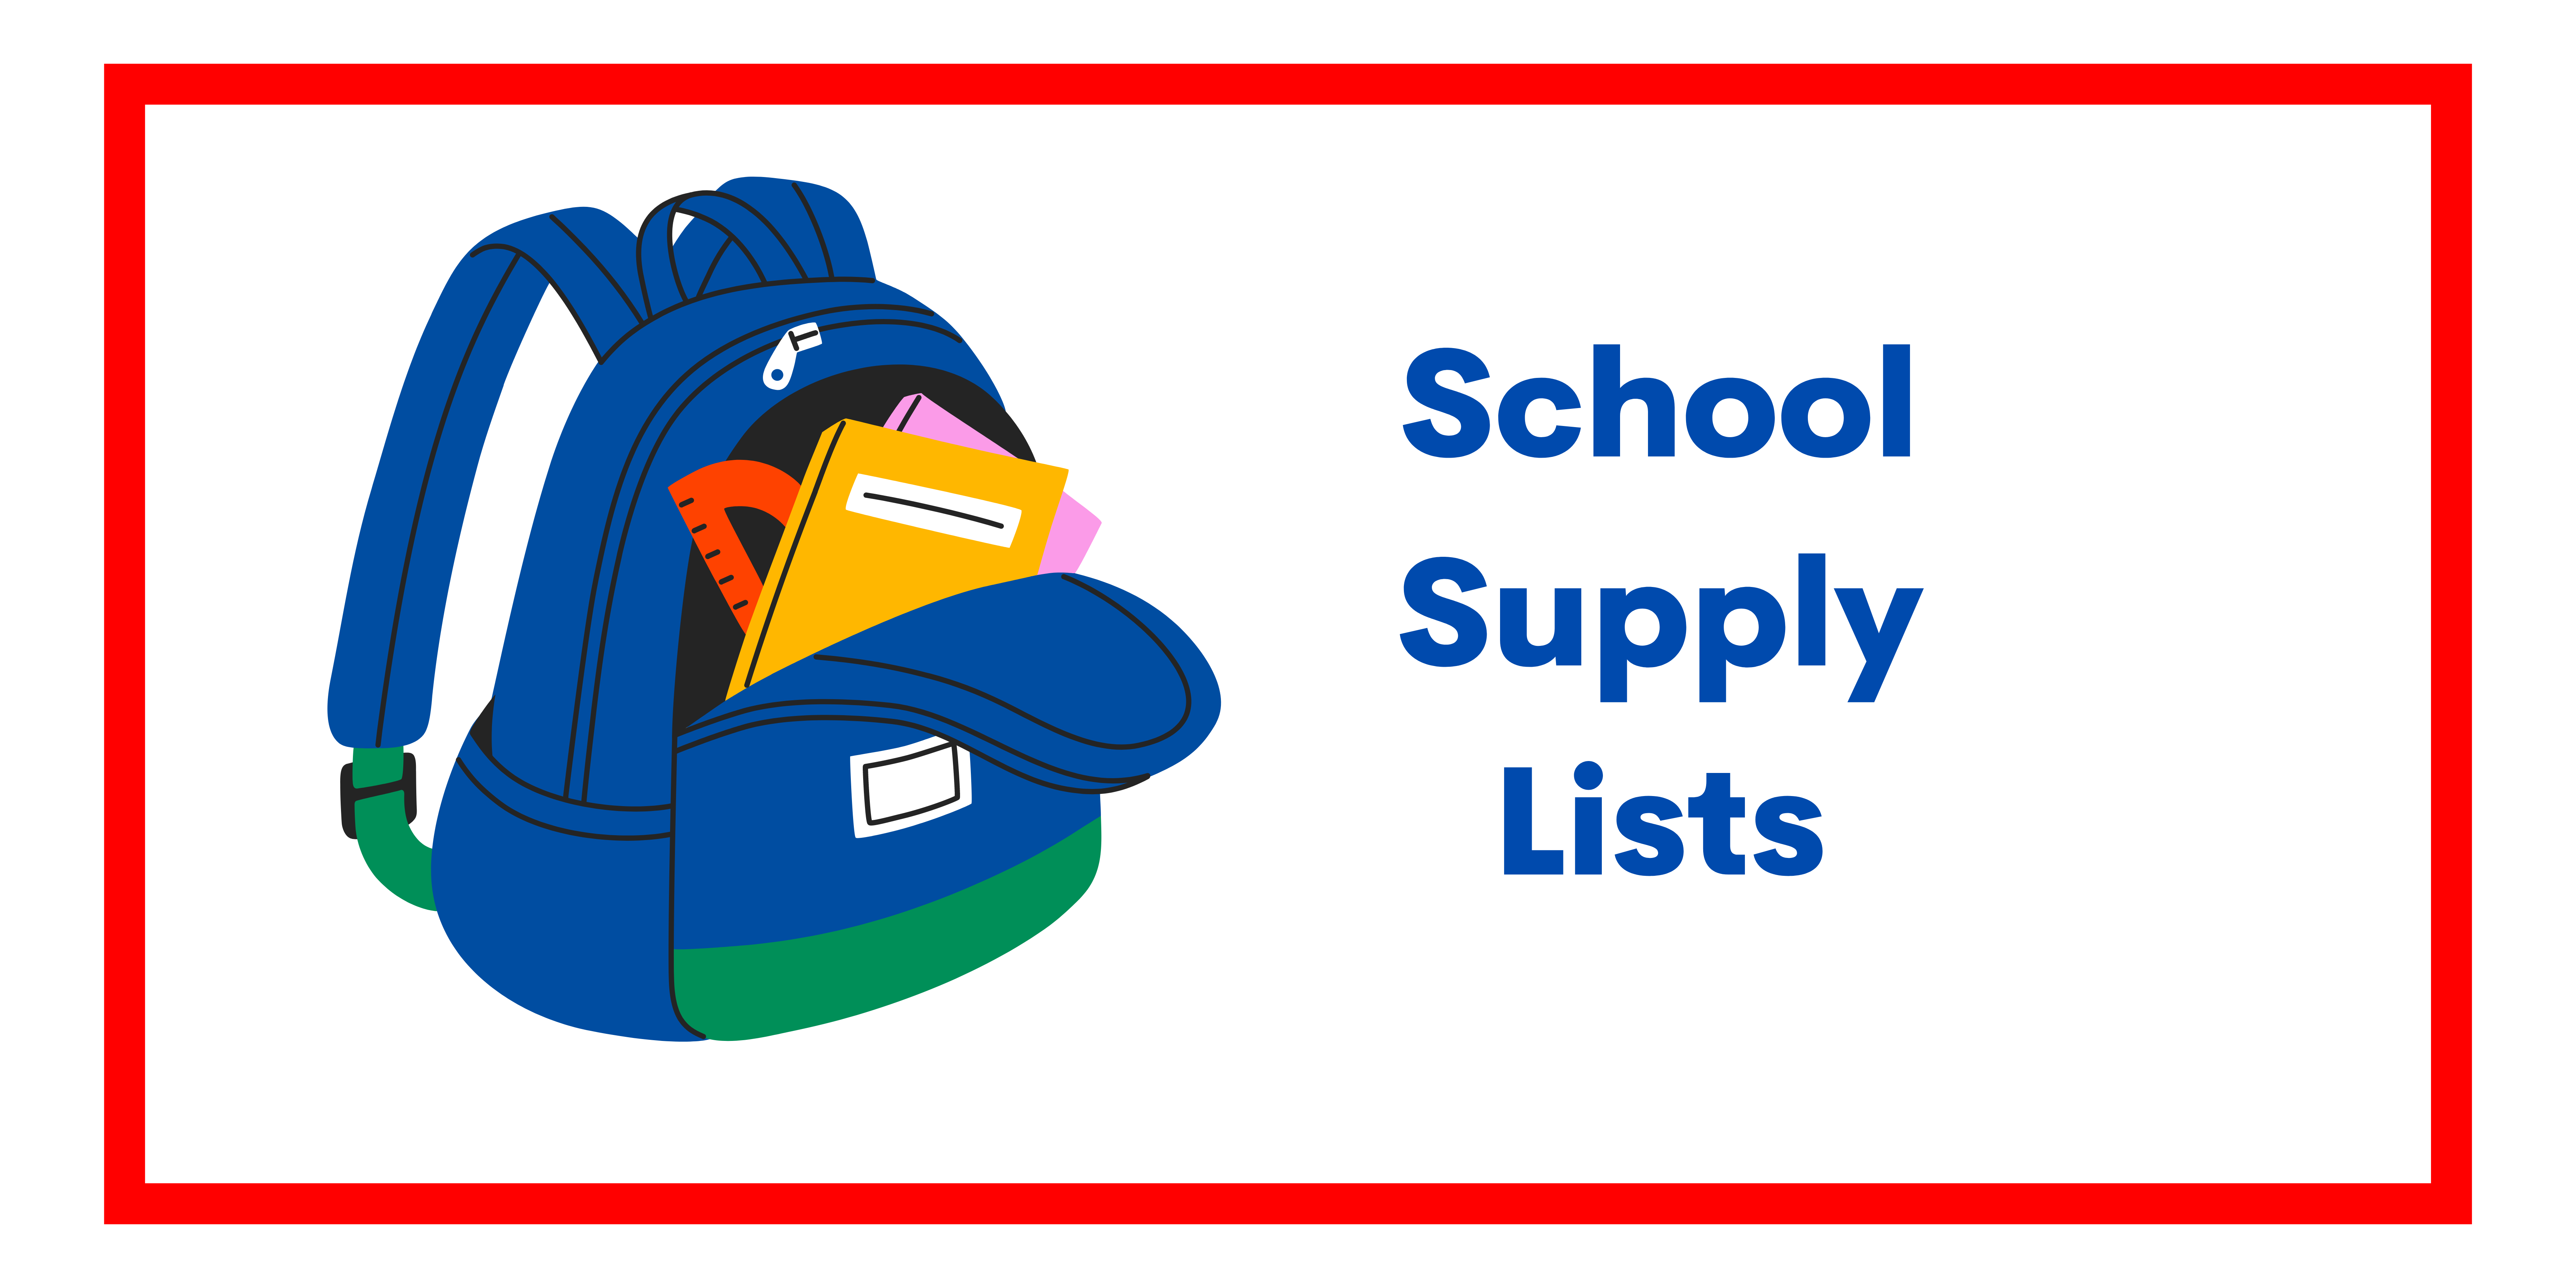 School Supply List / School Supply List